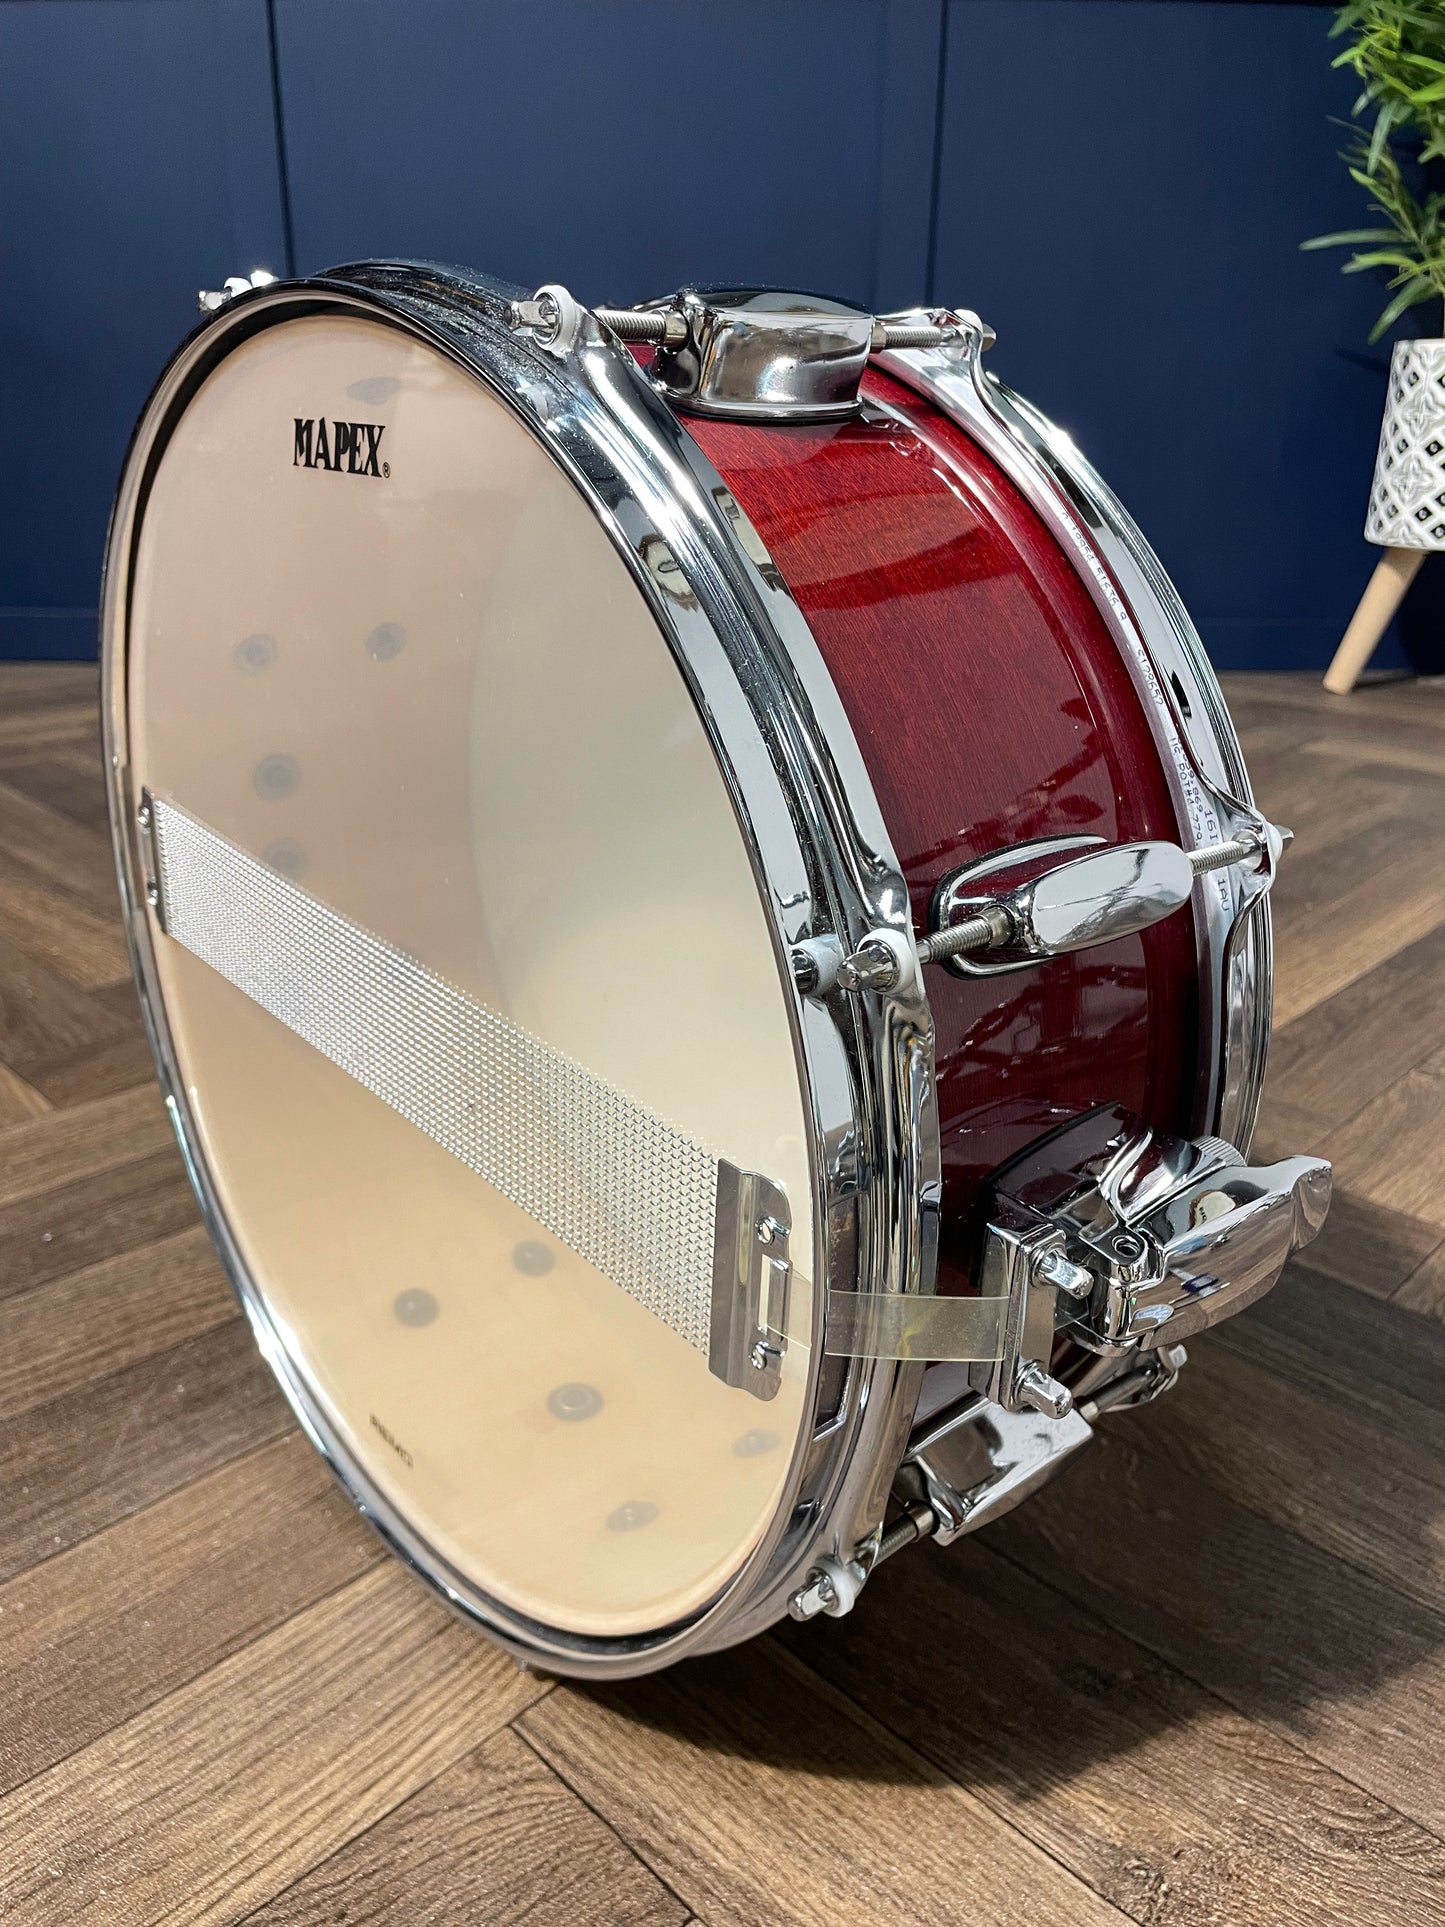 Mapex Pro M Maple 14” x 5.5” 8 Lug Snare Drum #LA162